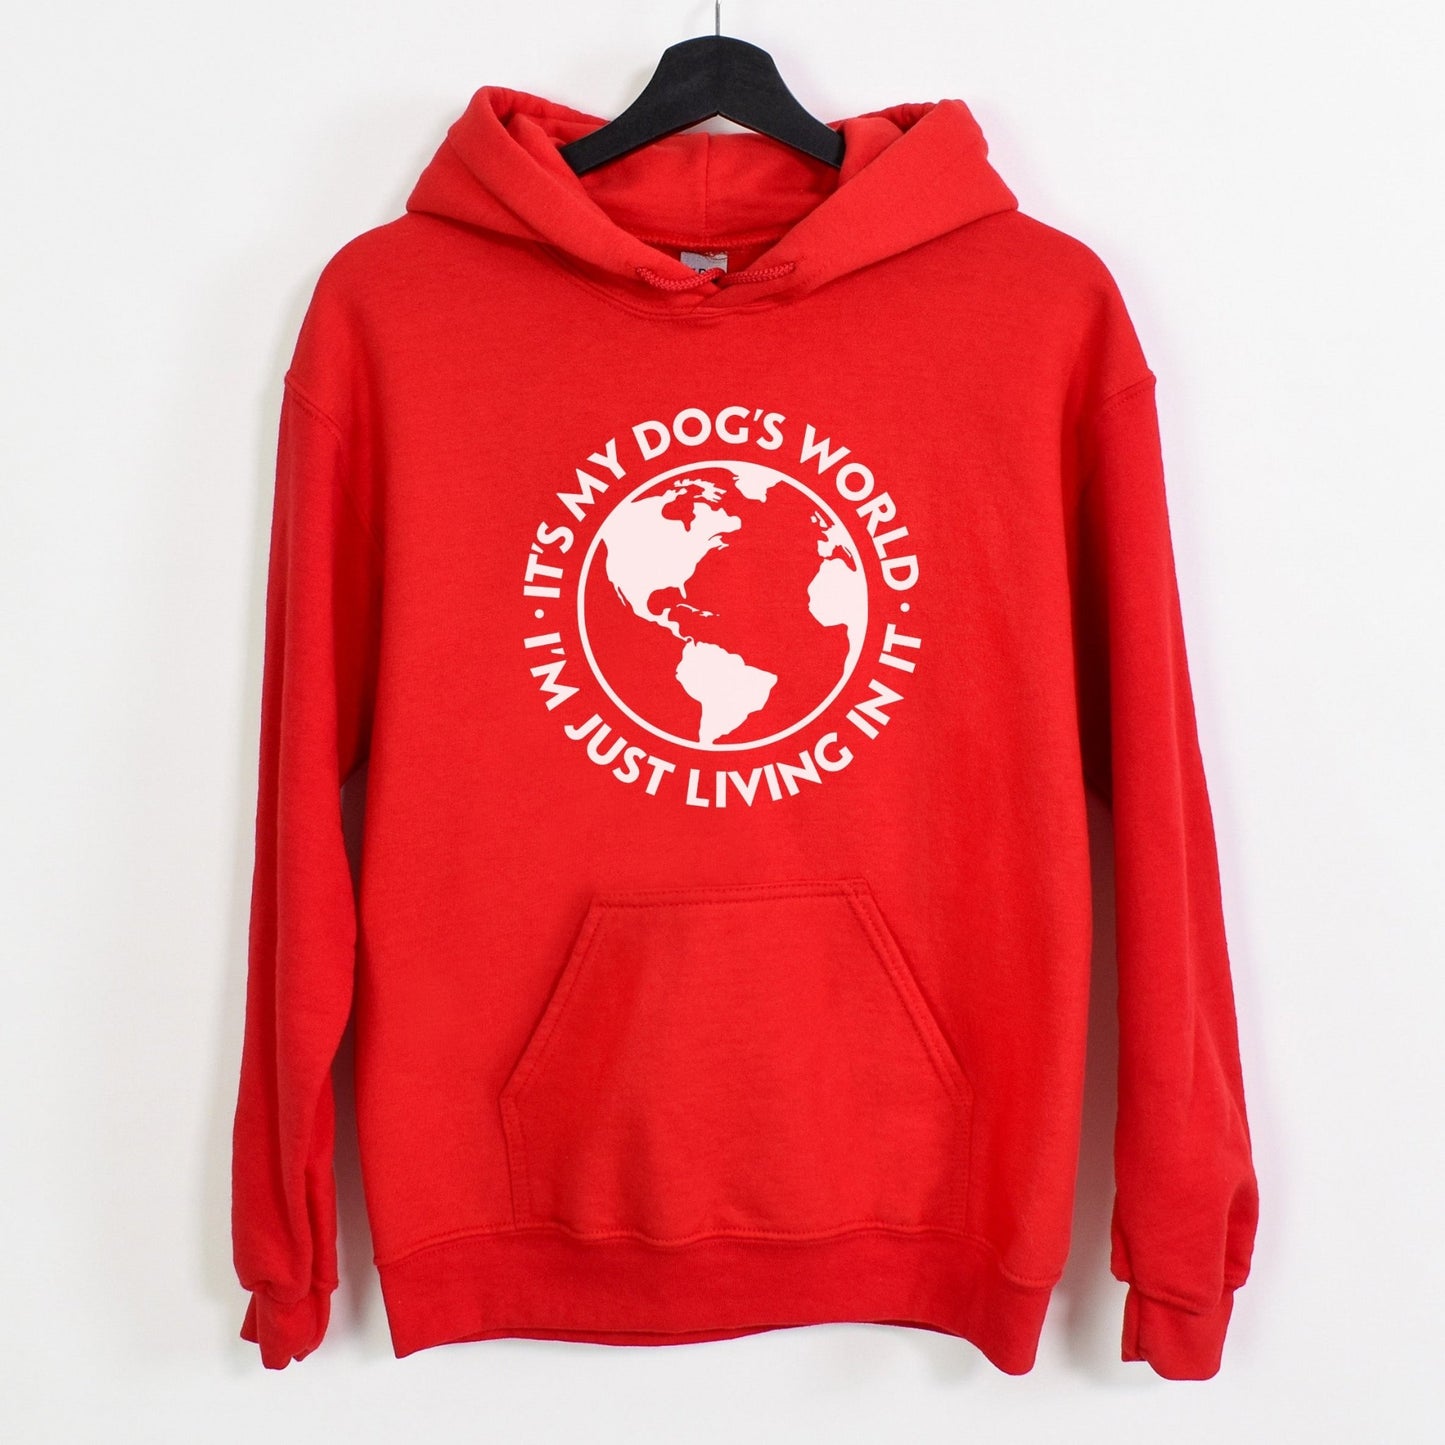 It's My Dog's World | Hooded Sweatshirt - Detezi Designs-29448405985507851248